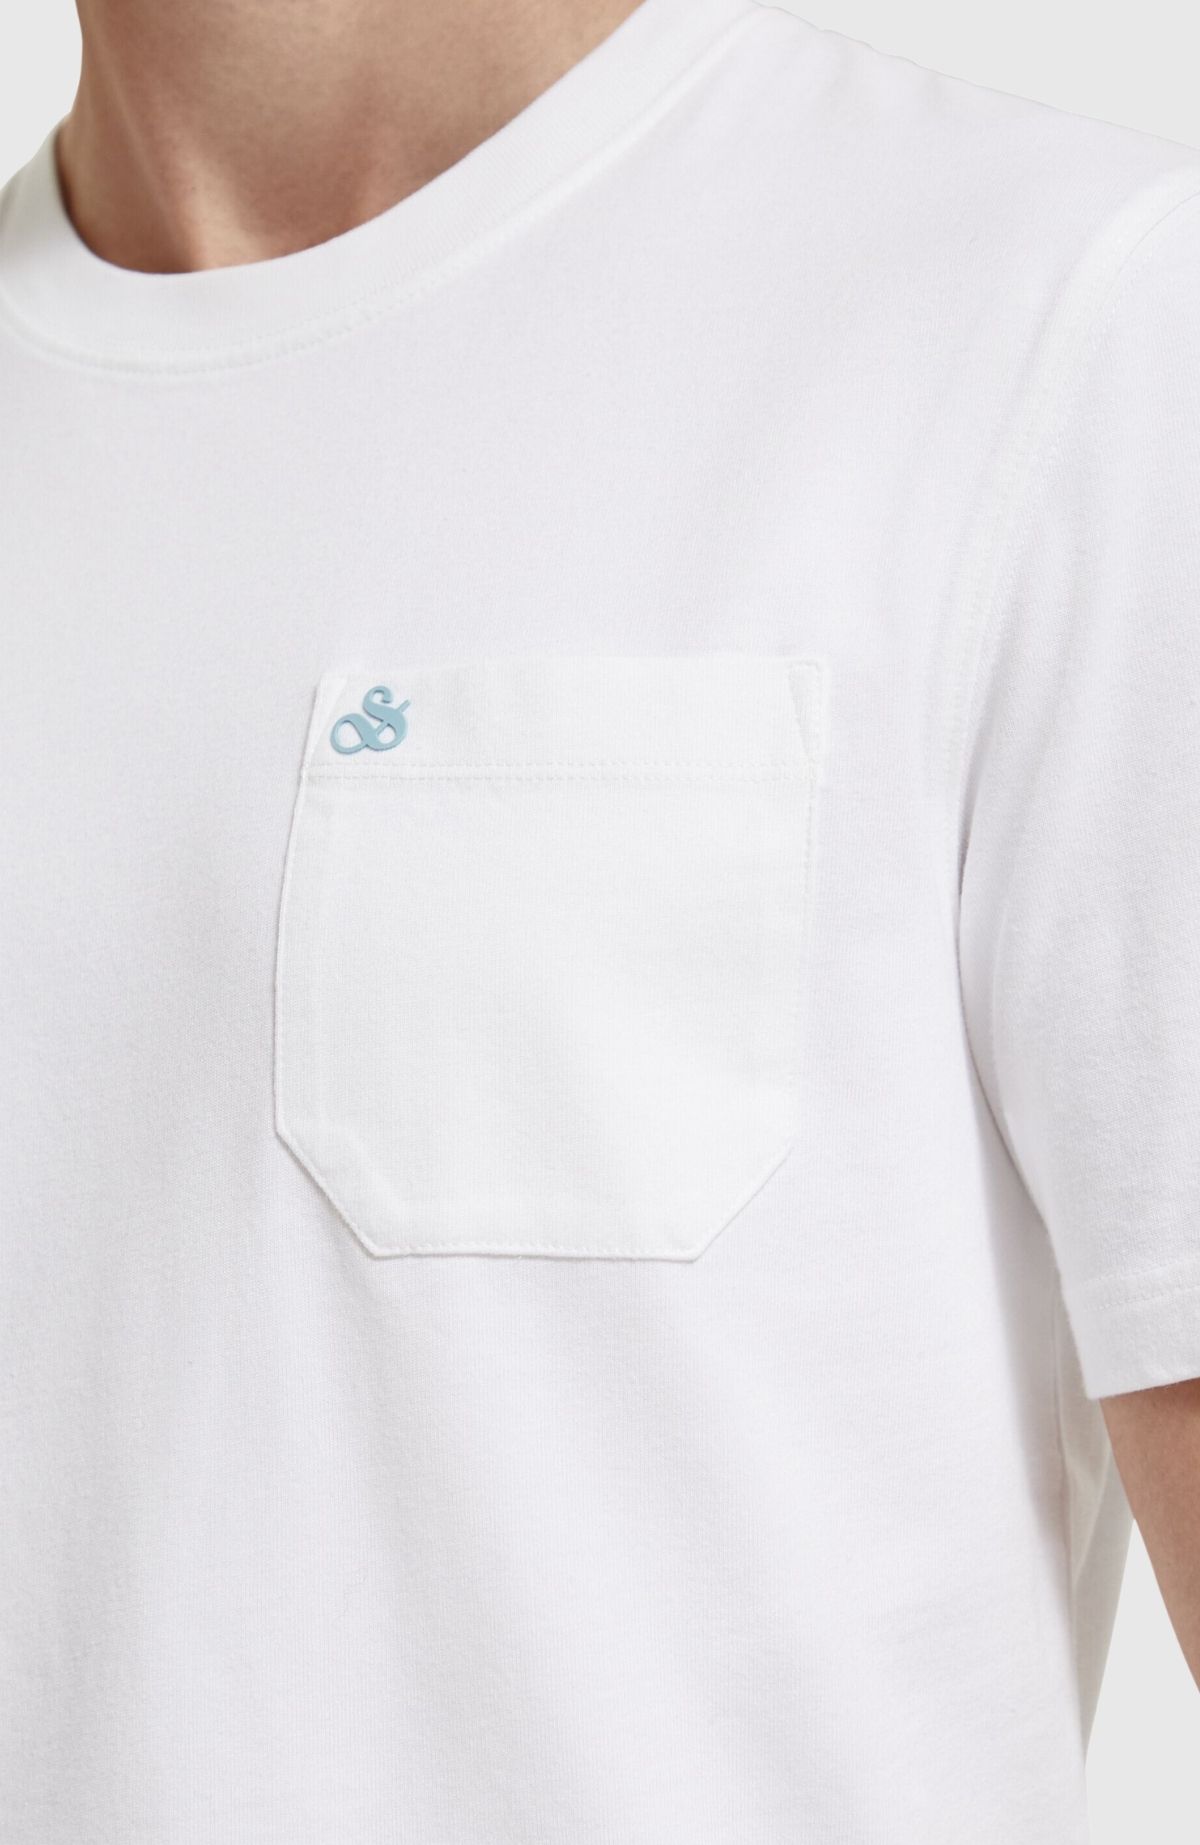 Chest Pocket T-Shirt